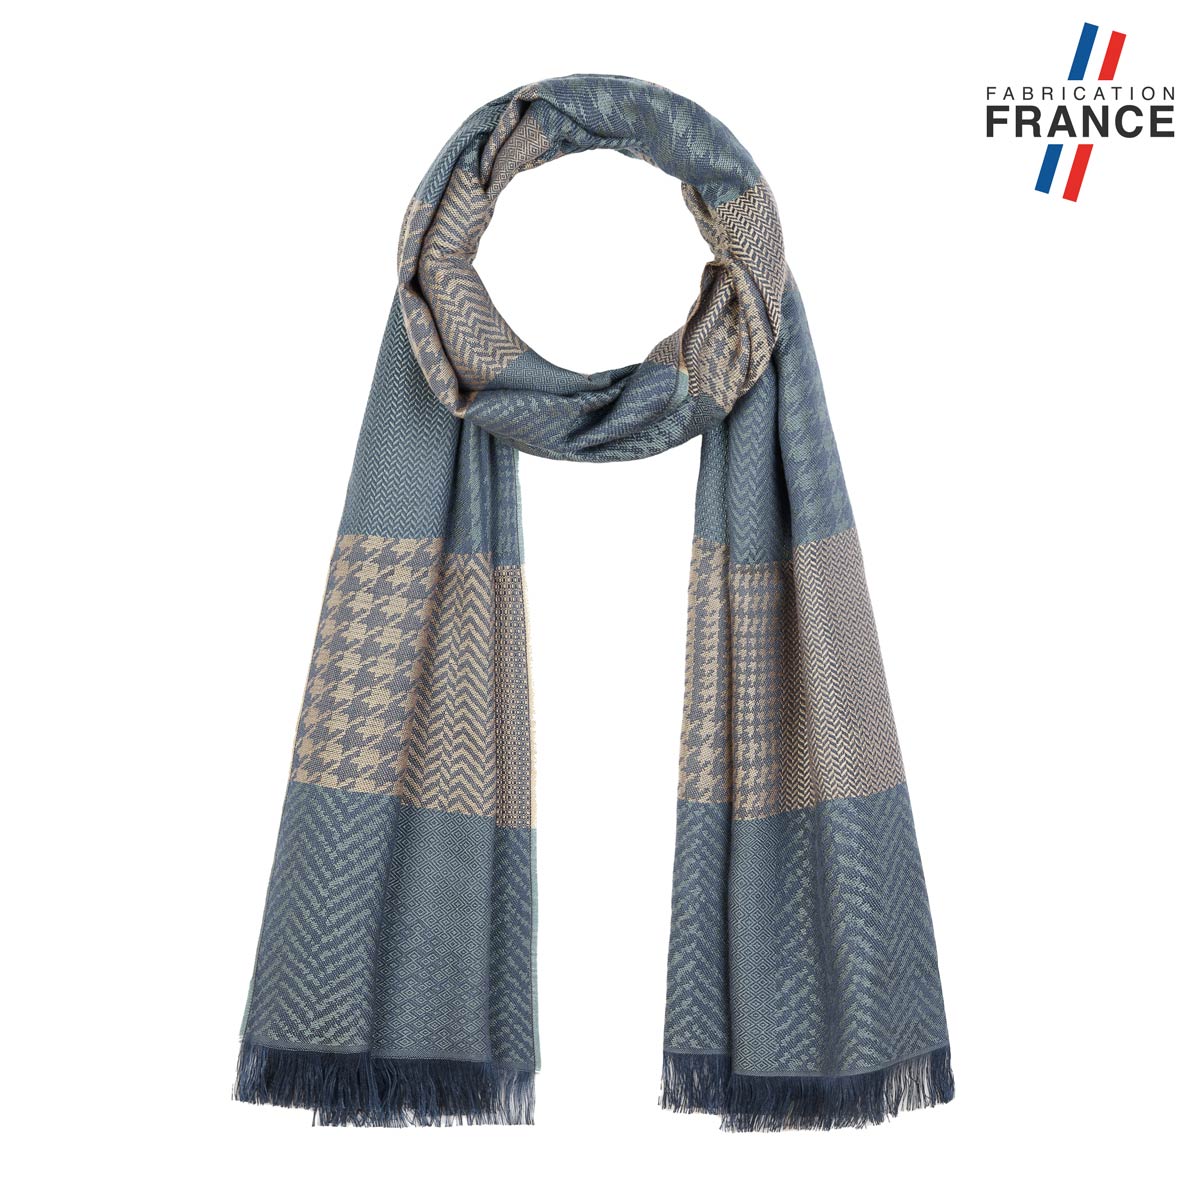 Echarpe-legere-motifs-chevrons-bleu-gris-fabriquee-en-France--AT-06905_F12-1FR